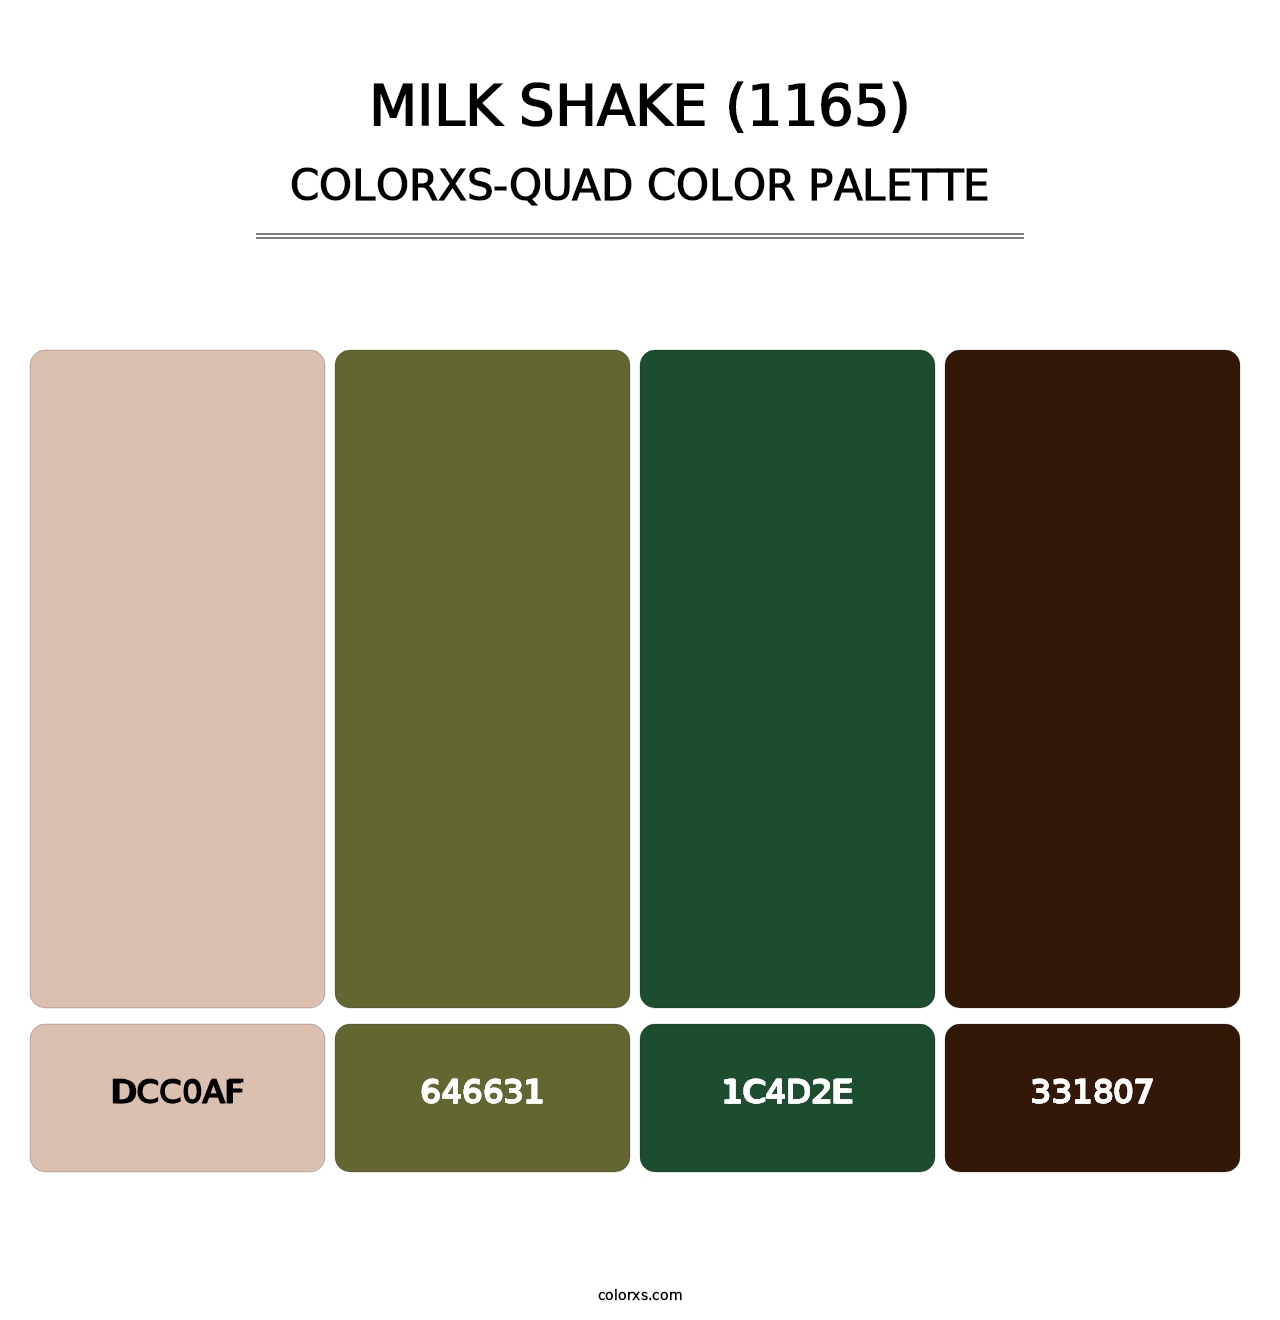 Milk Shake (1165) - Colorxs Quad Palette